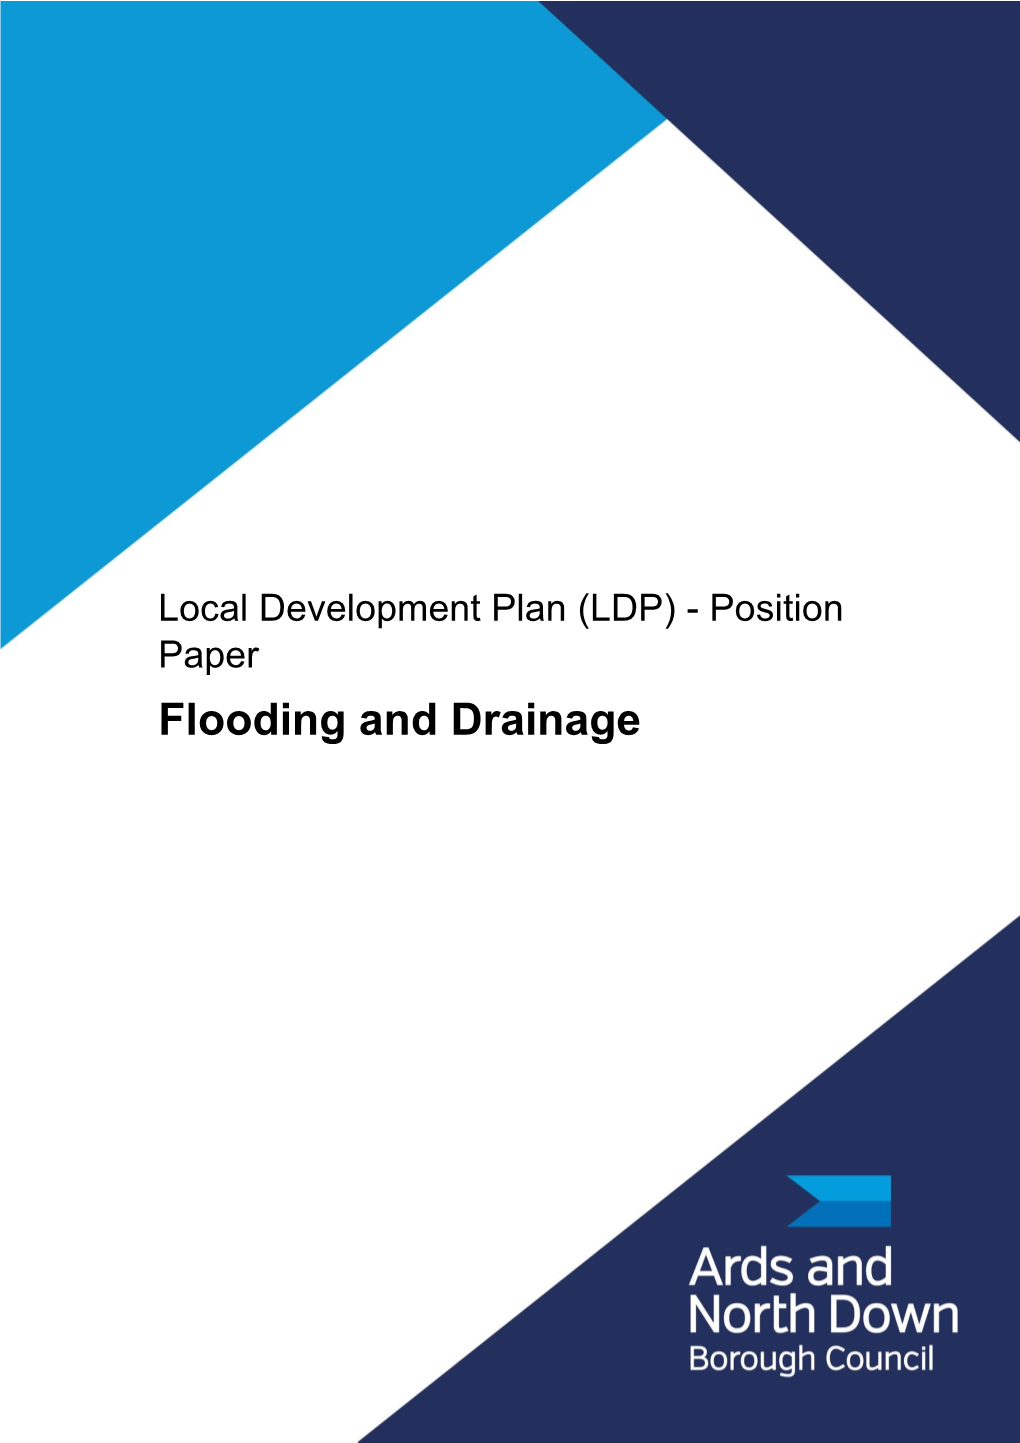 Flooding and Drainage